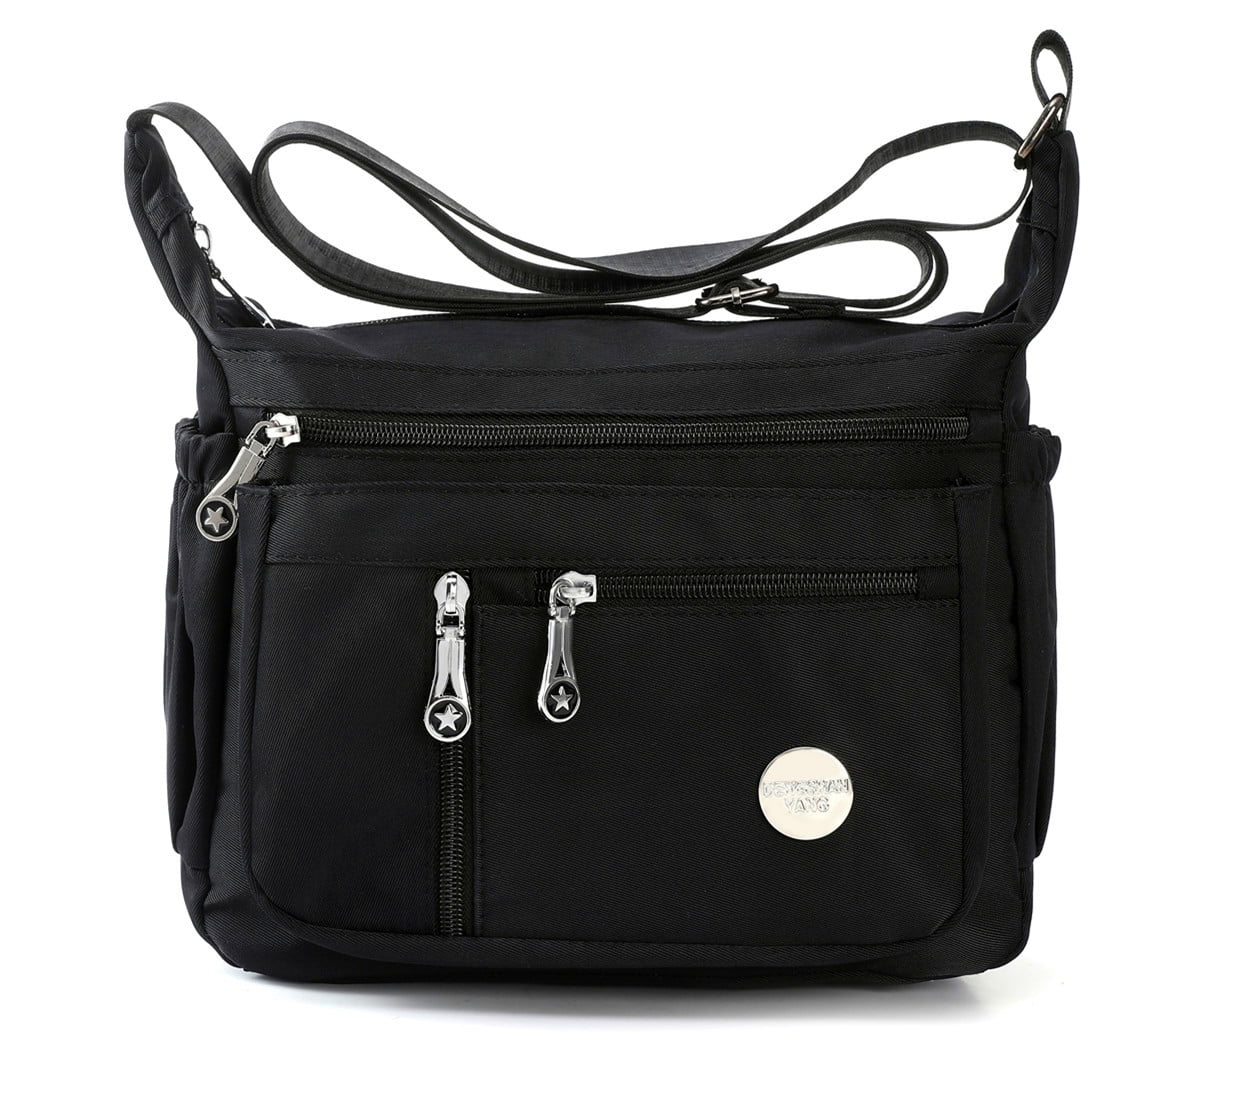 HERCMNOY Women Crossbody Bags Shoulder Bag Handbag Multiple Pockets Bag ...